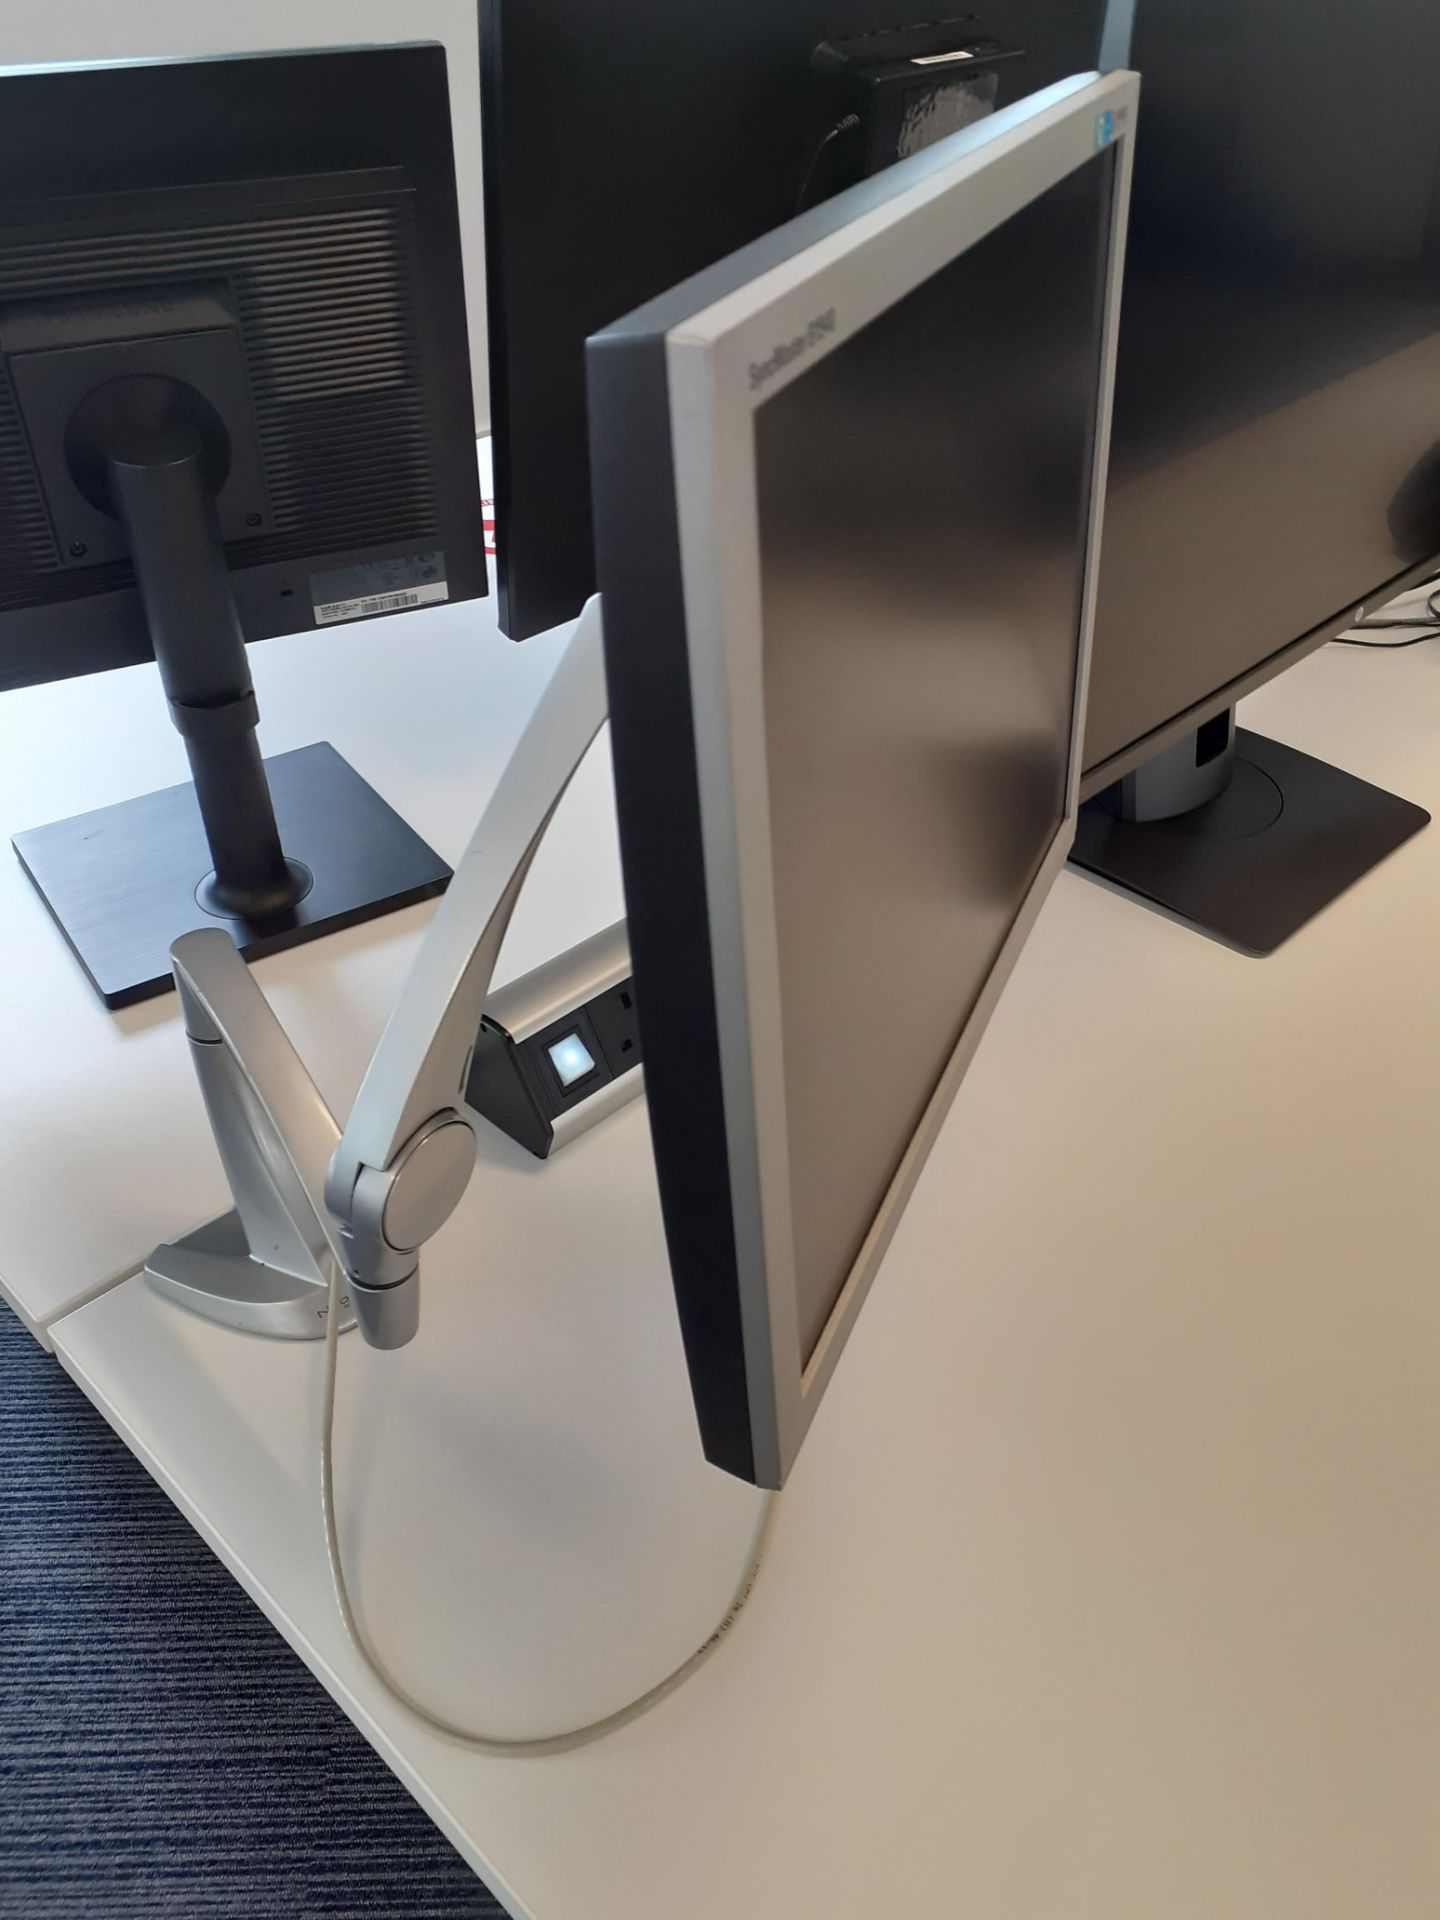 2 Ergotron Neo-Flex Desk Mount Monitor Brackets with 2 x Samsung Syncmaster B1940 Computer Monitors